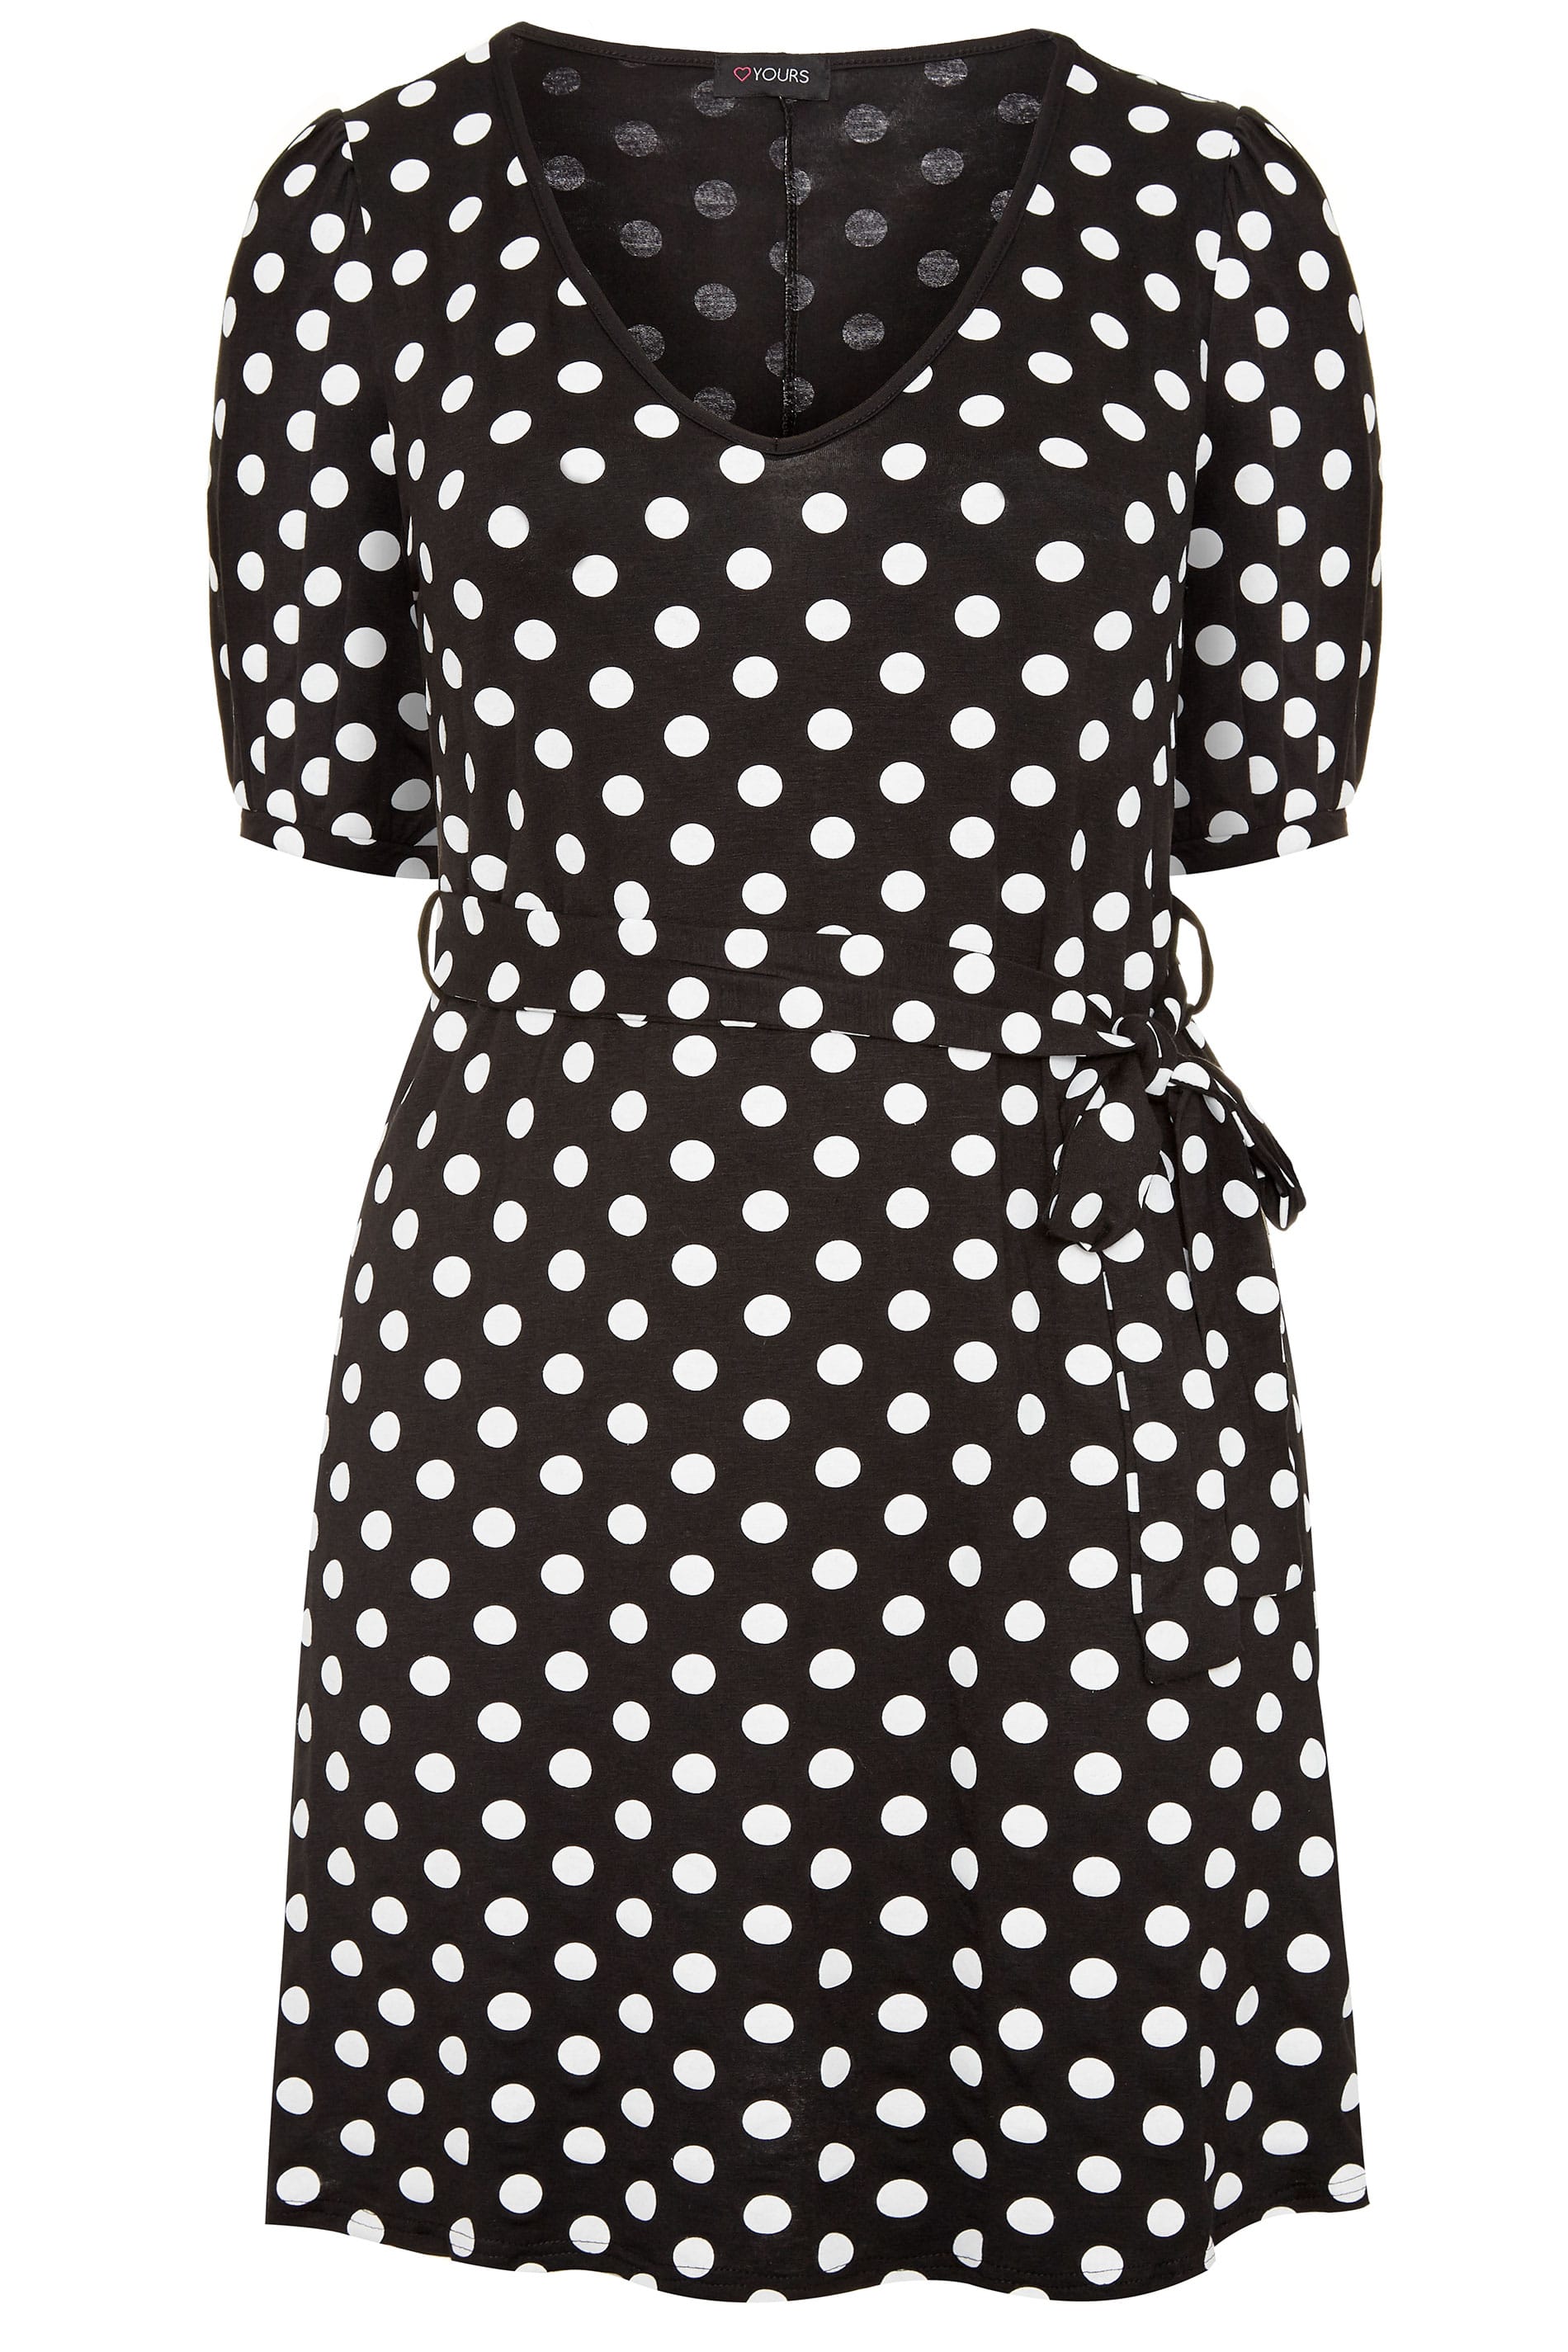 Black & White Polka Dot Swing Dress | Yours Clothing